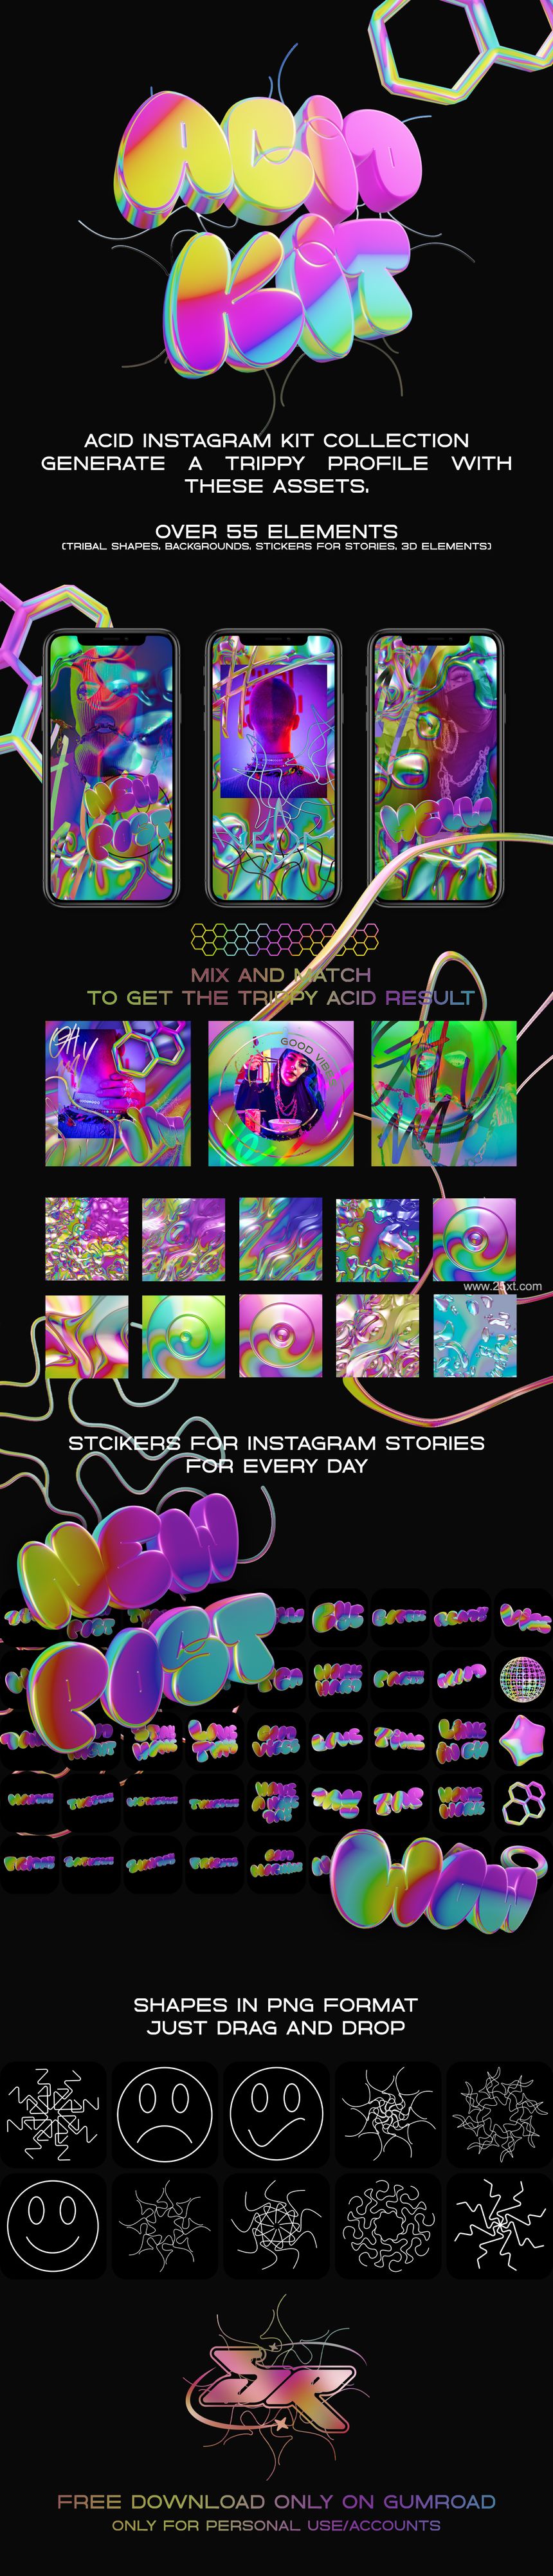 25xt-486914-acid instagram kit collection1.jpg